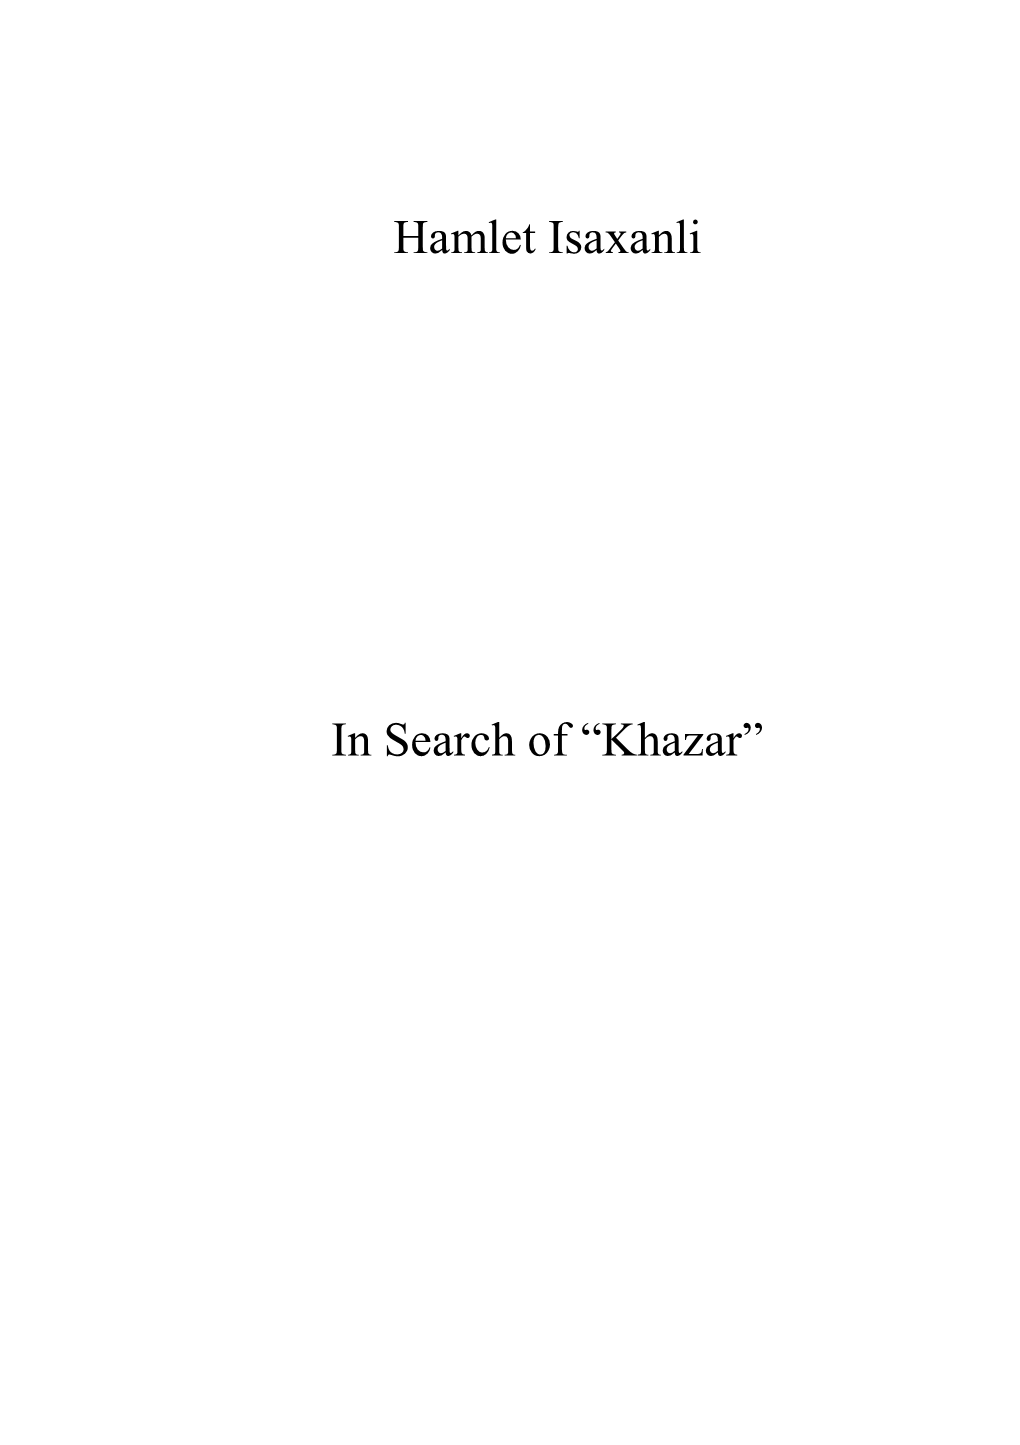 Hamlet Isaxanli in Search of “Khazar”